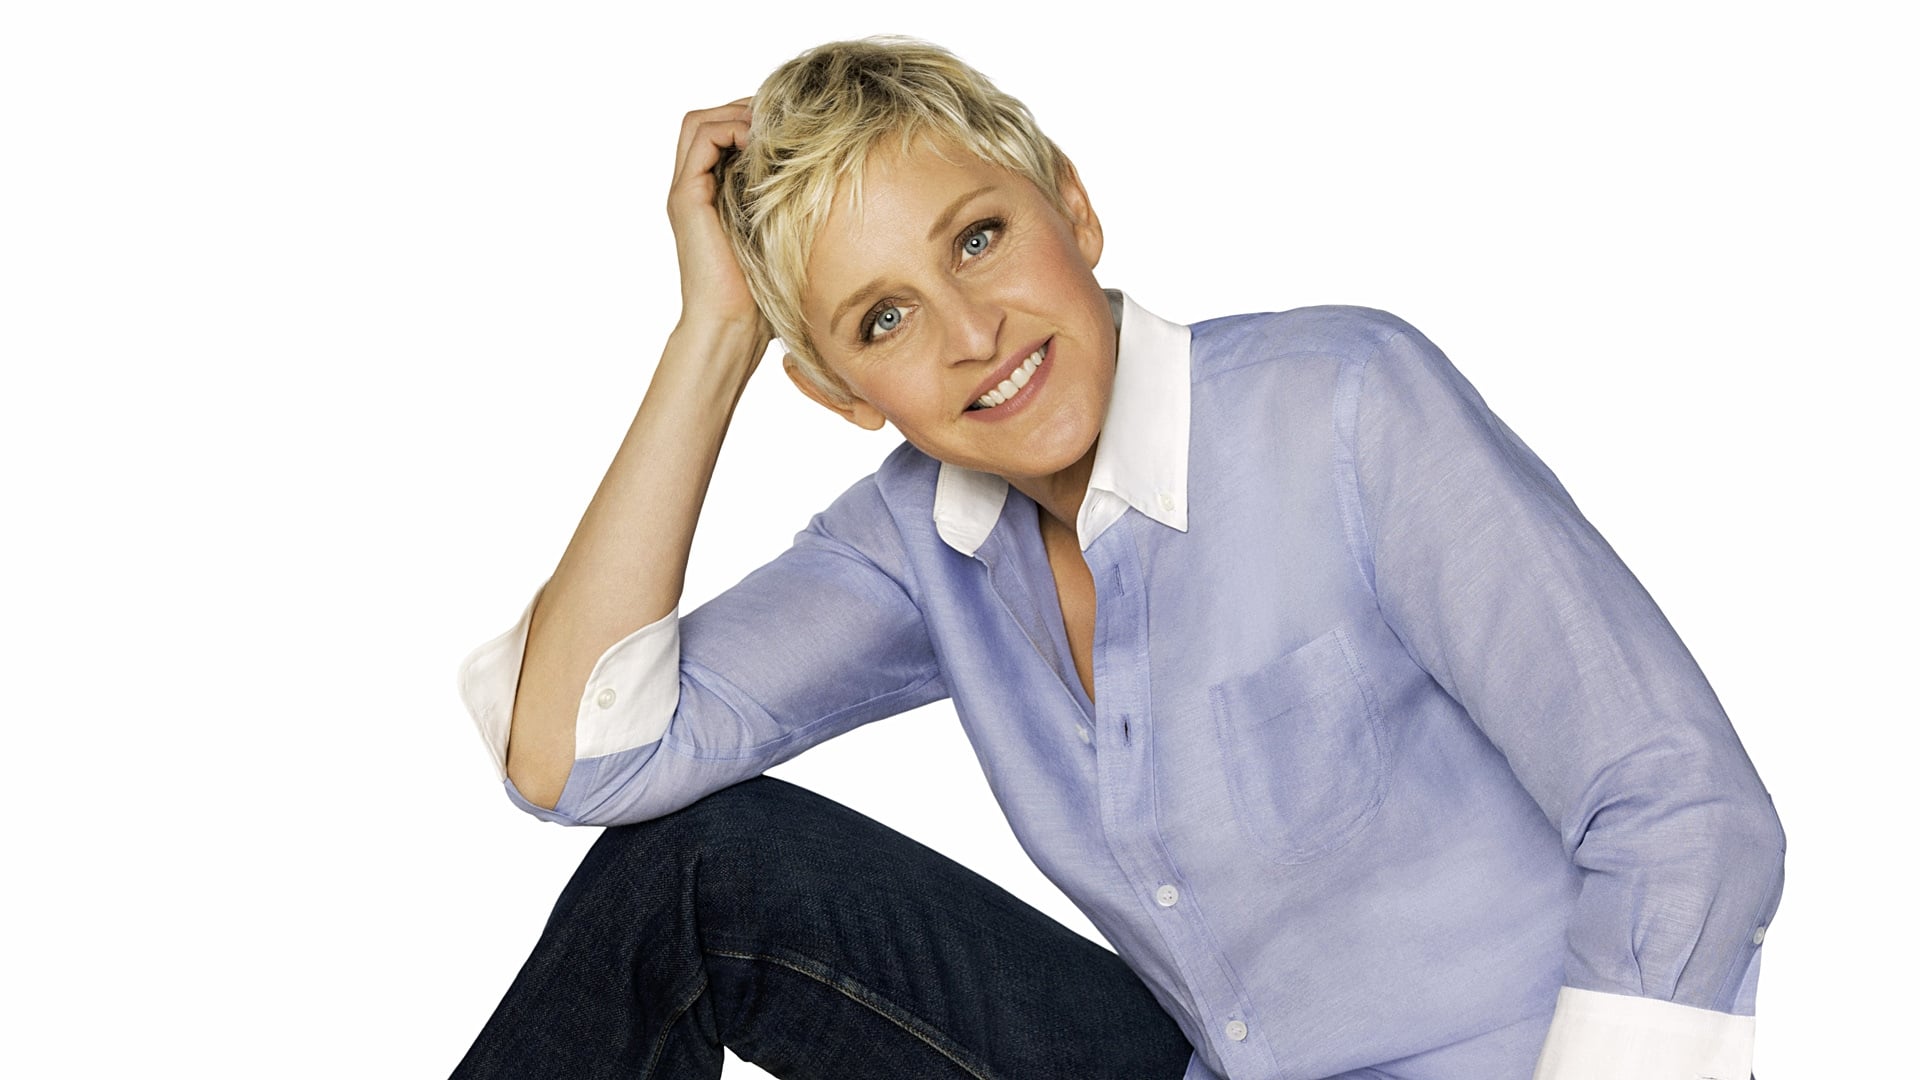 The Ellen DeGeneres Show - Season 19 Episode 40 : Guest Host Tiffany Haddish with Nicole Scherzinger, Blake Anderson